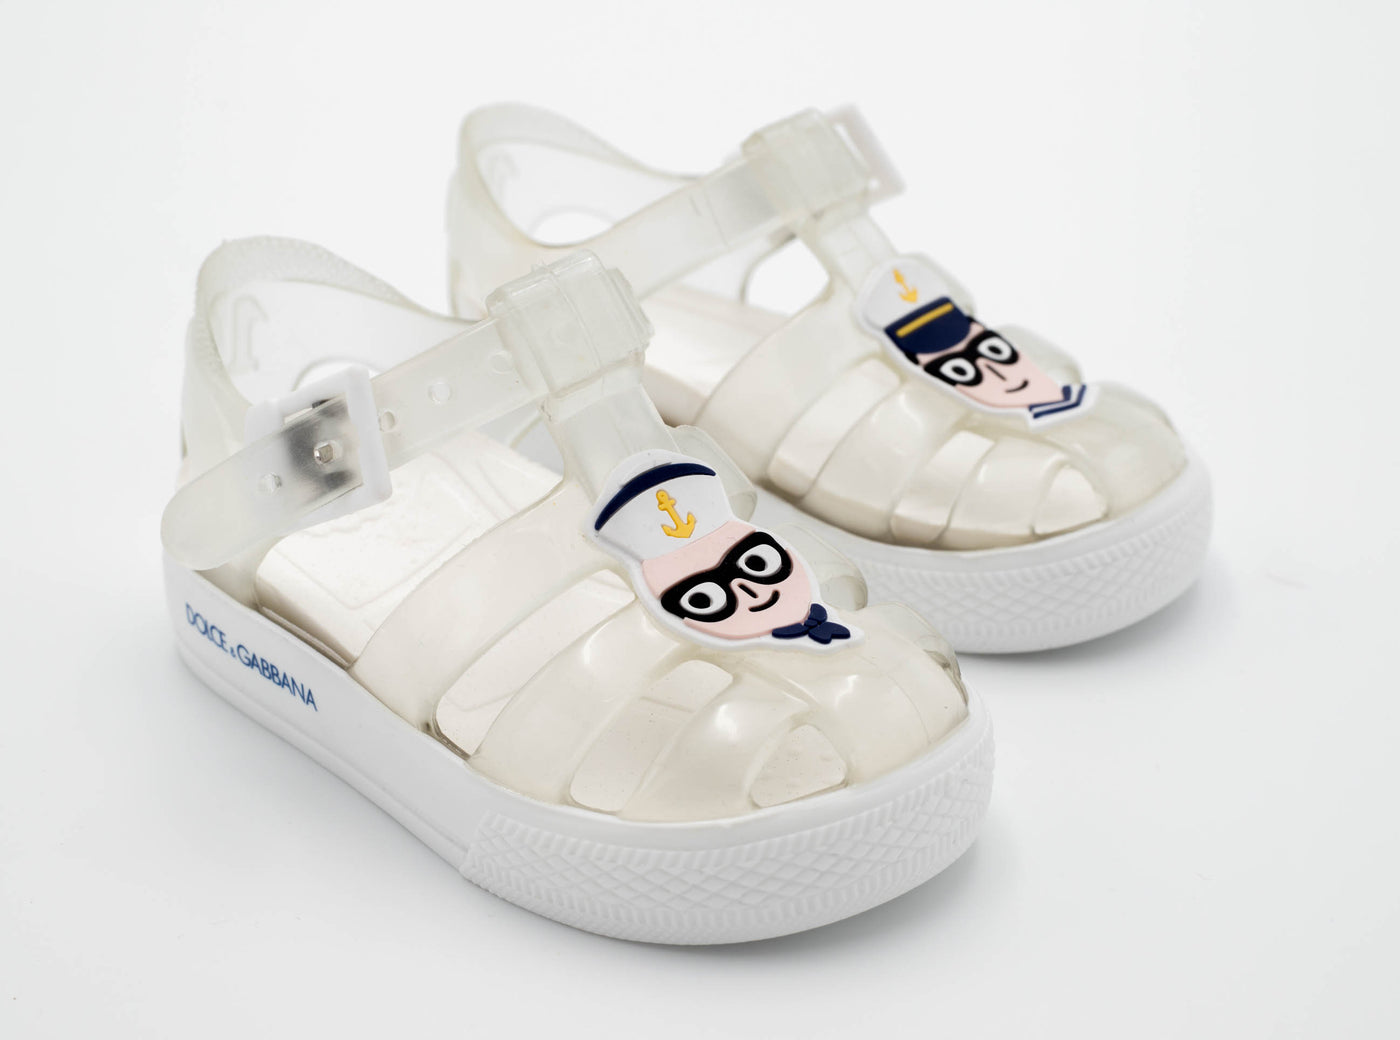 Dolce & Gabbana – Sandals Transparent White Beachwear